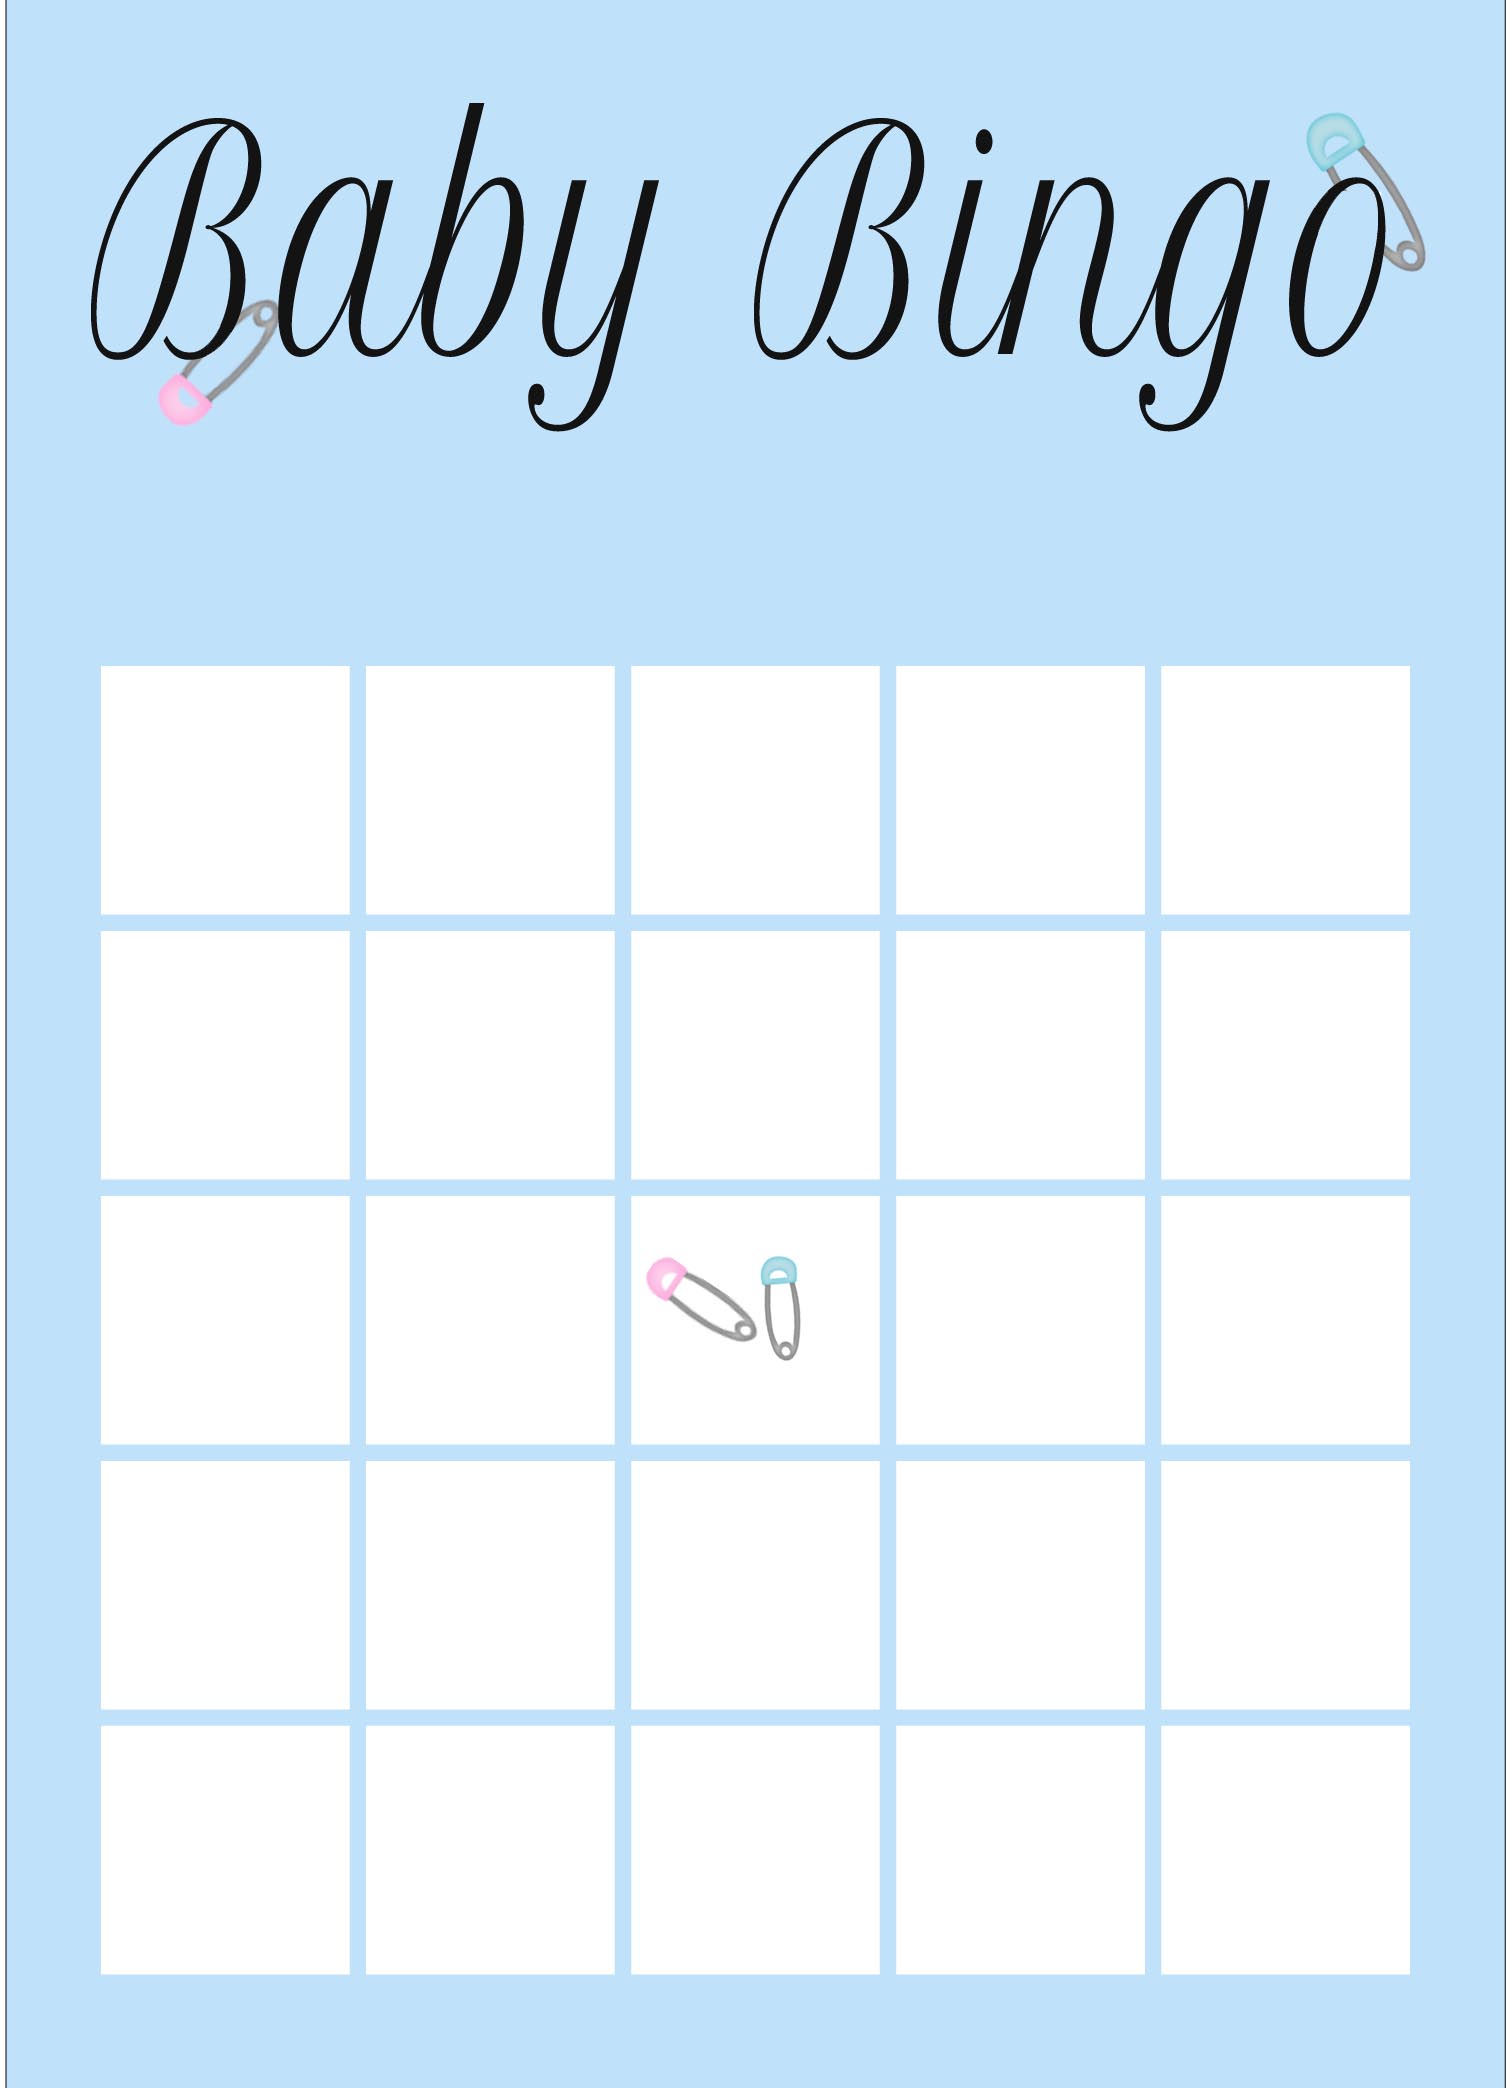 woodland-trio-bingo-game-template-card-template-printable-baby